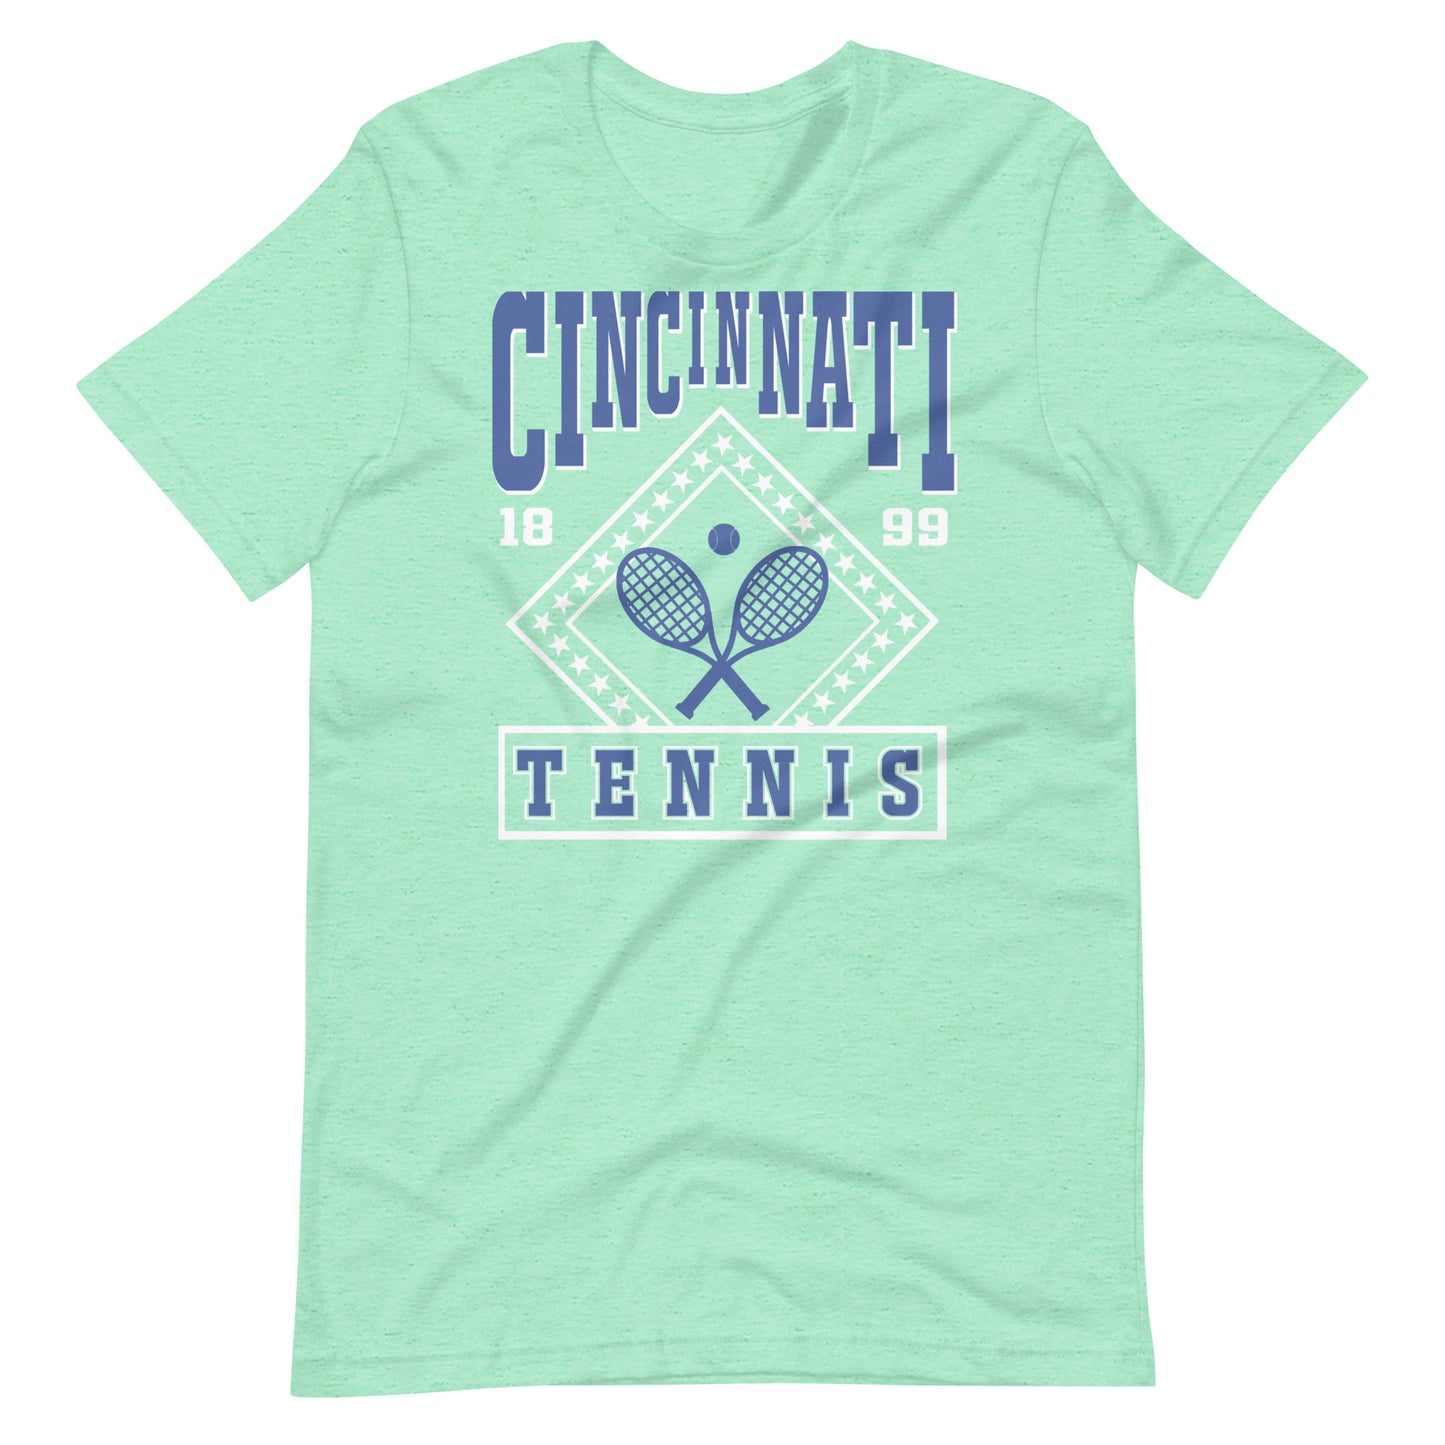 1899 Cincinnati Tennis unisex shirt